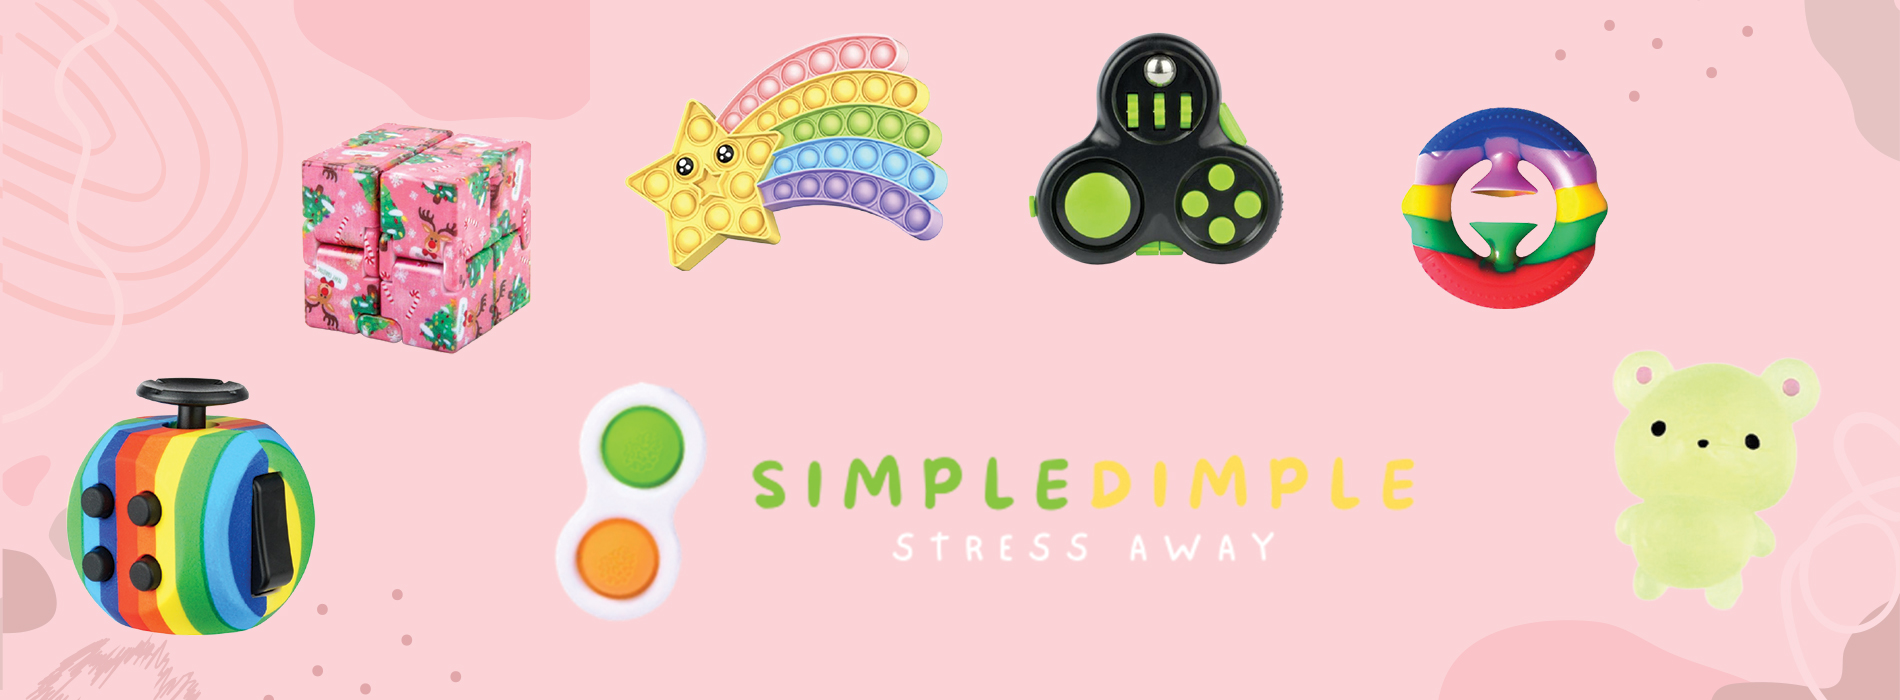 simpledimplefidget banner - Simple Dimple Fidget